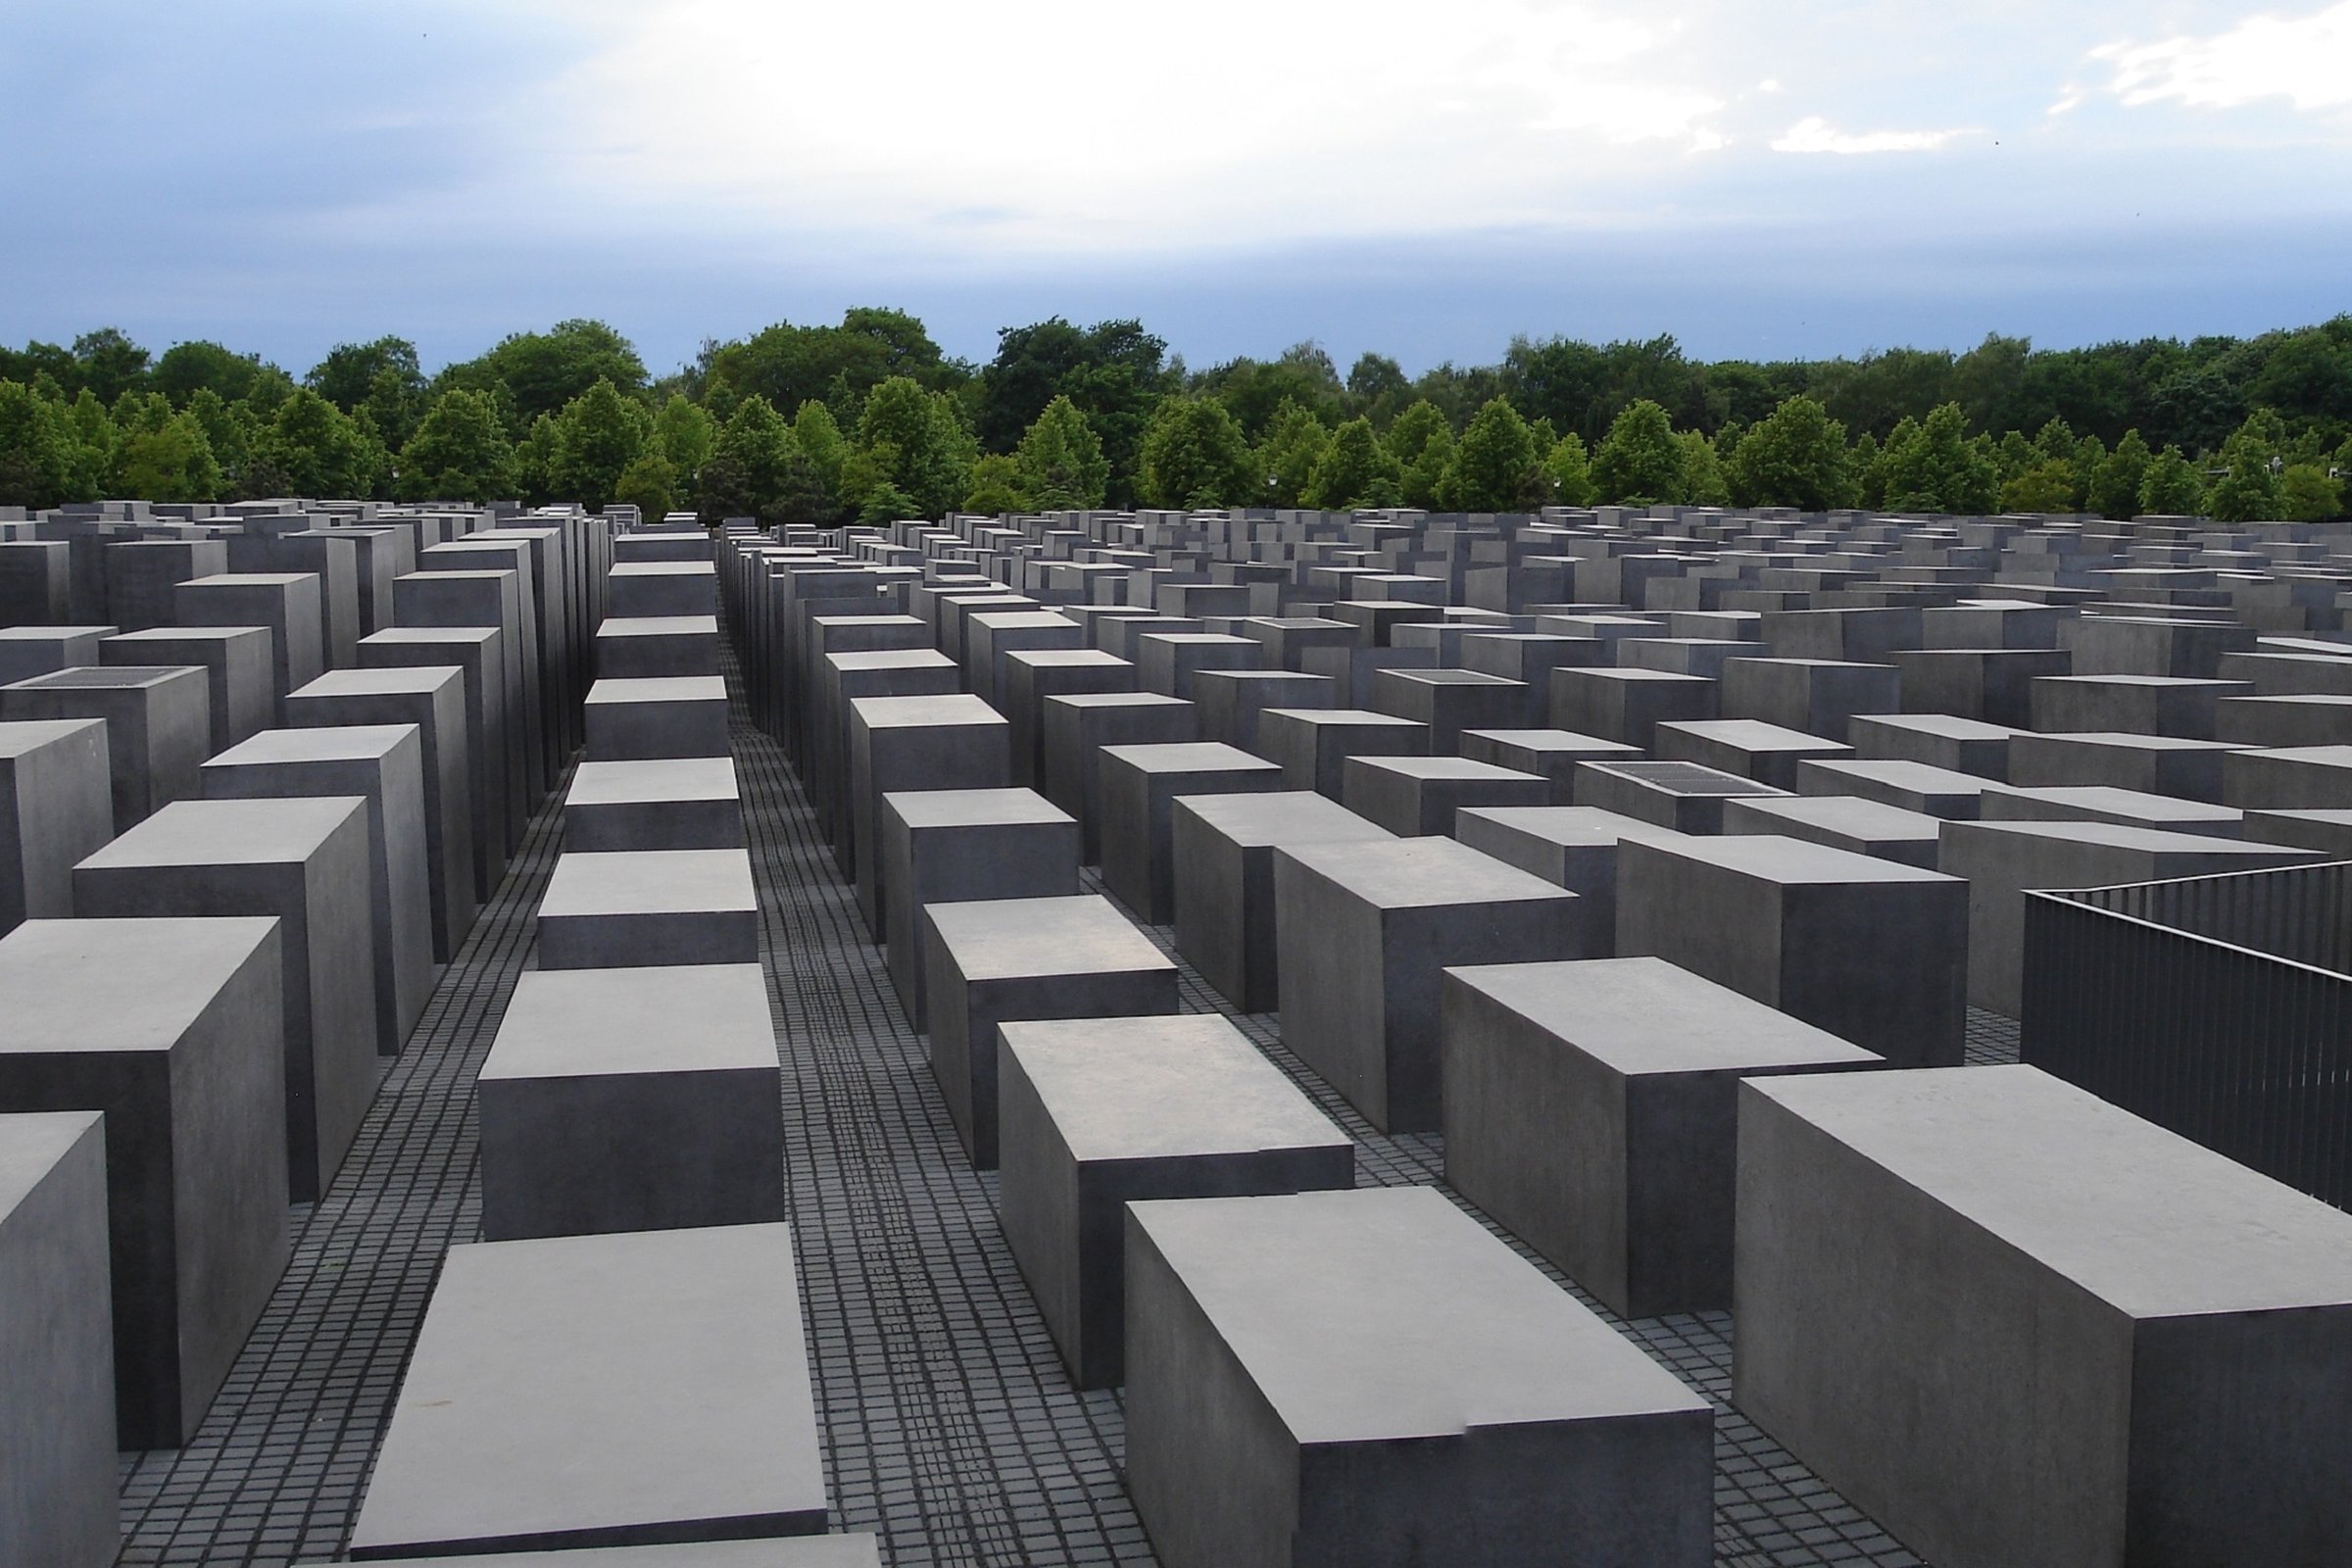 Image result for holocaust memorial"